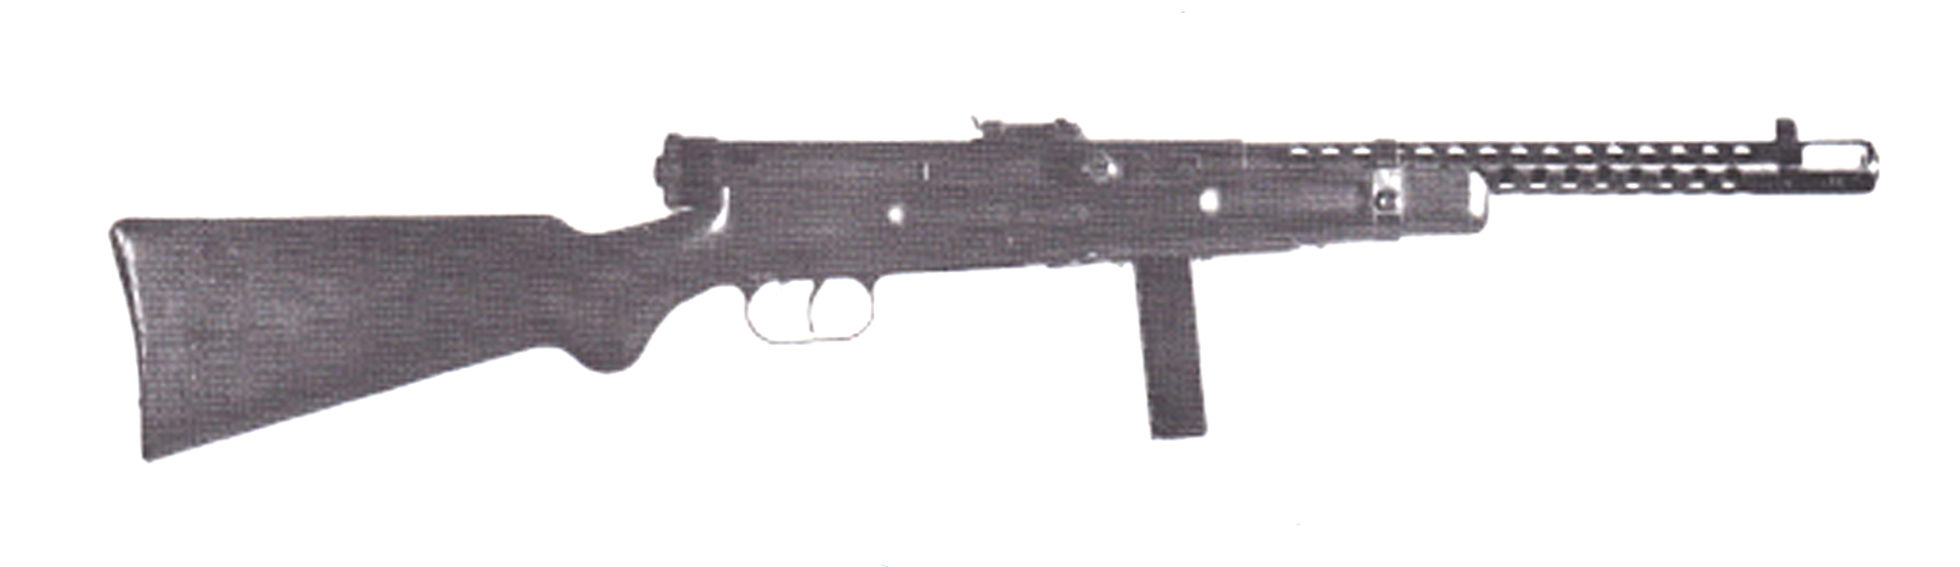 The Italian Beretta Model 38 submachine guns – LAI Publications